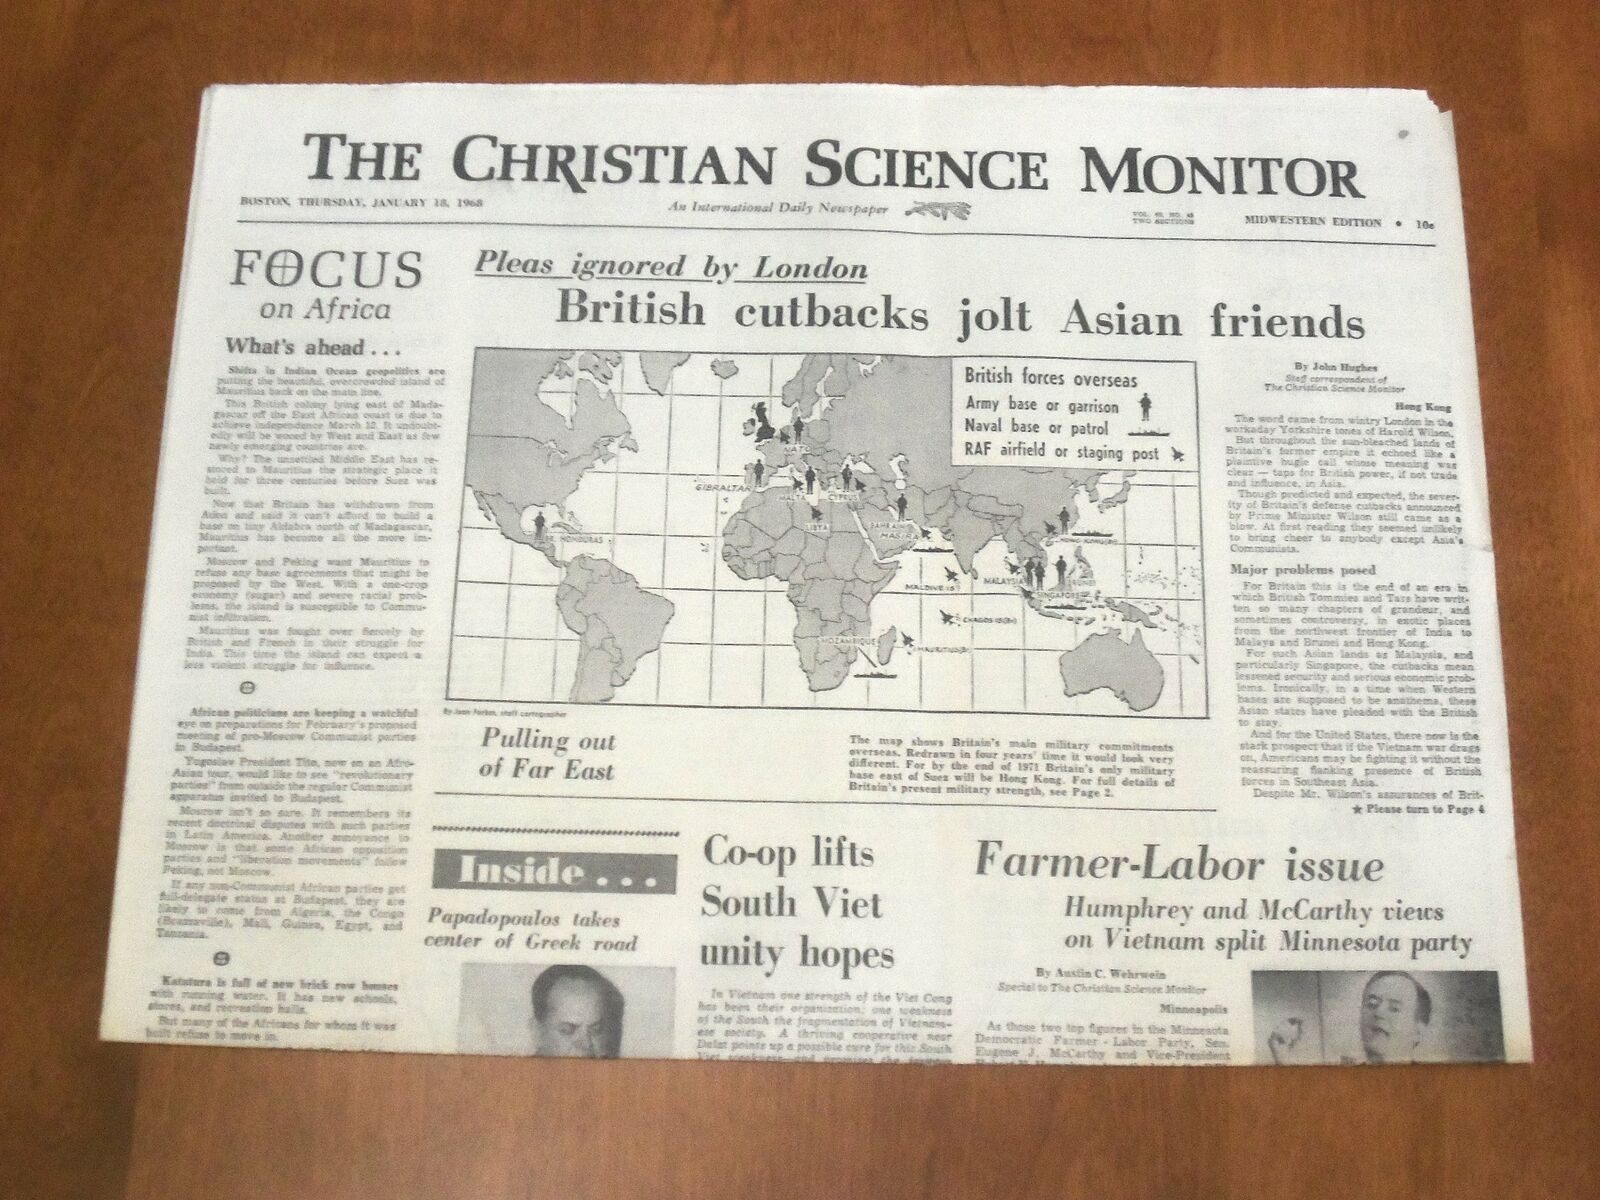 1968 JAN 18 THE CHRISTIAN SCIENCE MONITOR -BRITISH CUTBACKS JOLT ASIA - NP 4628